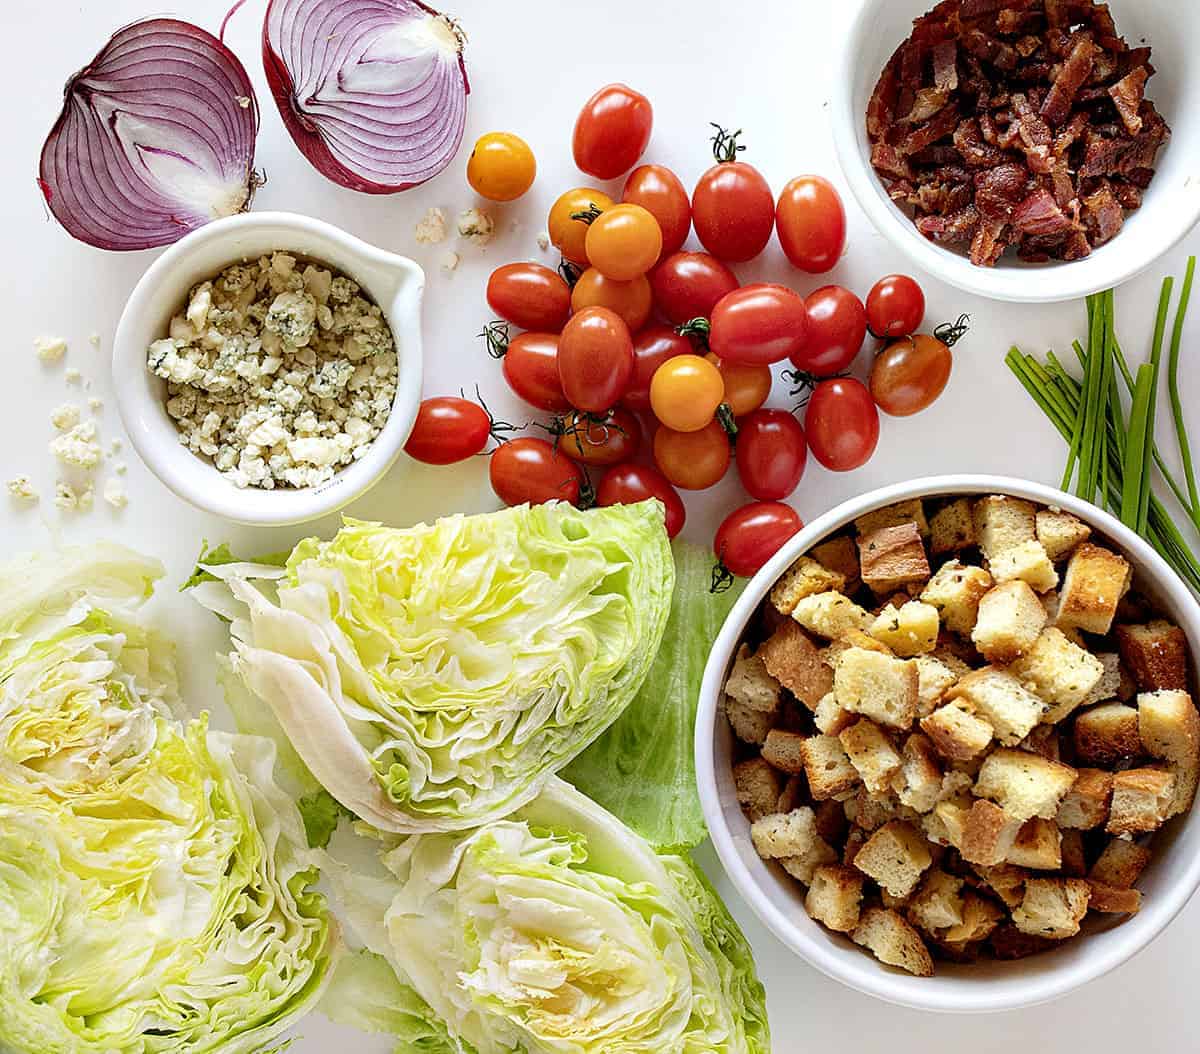 Ingredients for Wedge Salad